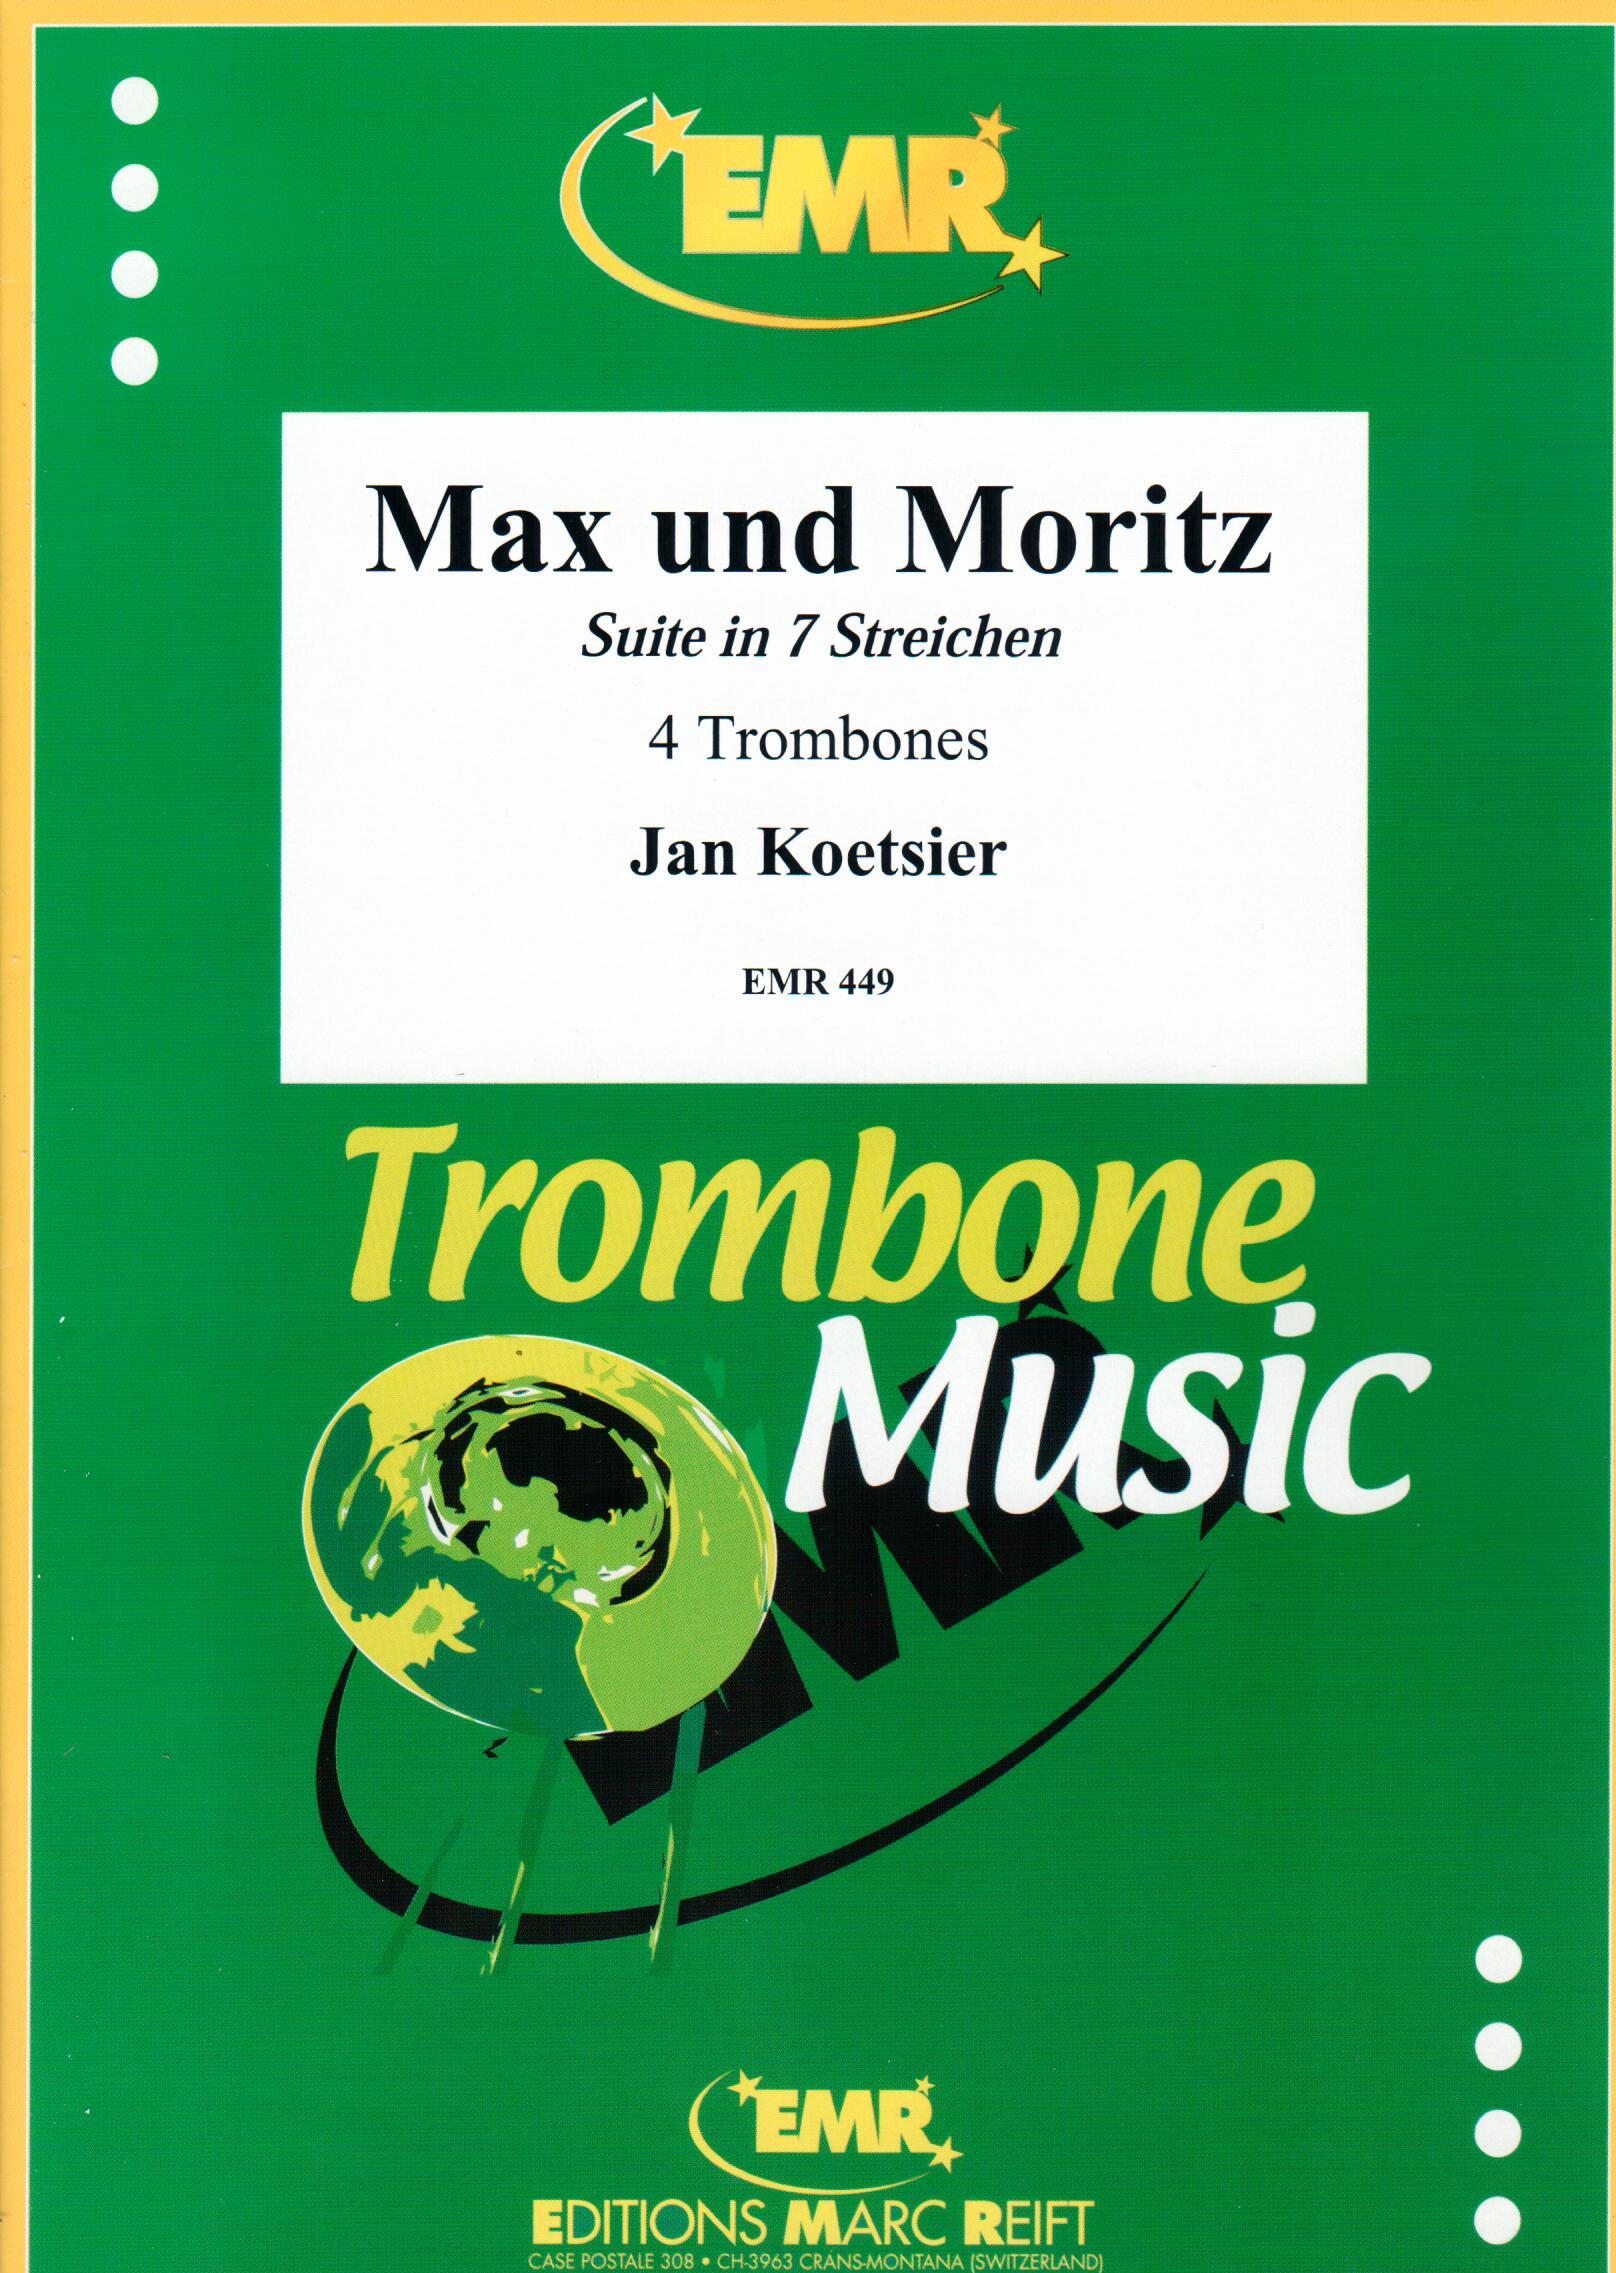 MAX UND MORITZ, SOLOS - Trombone